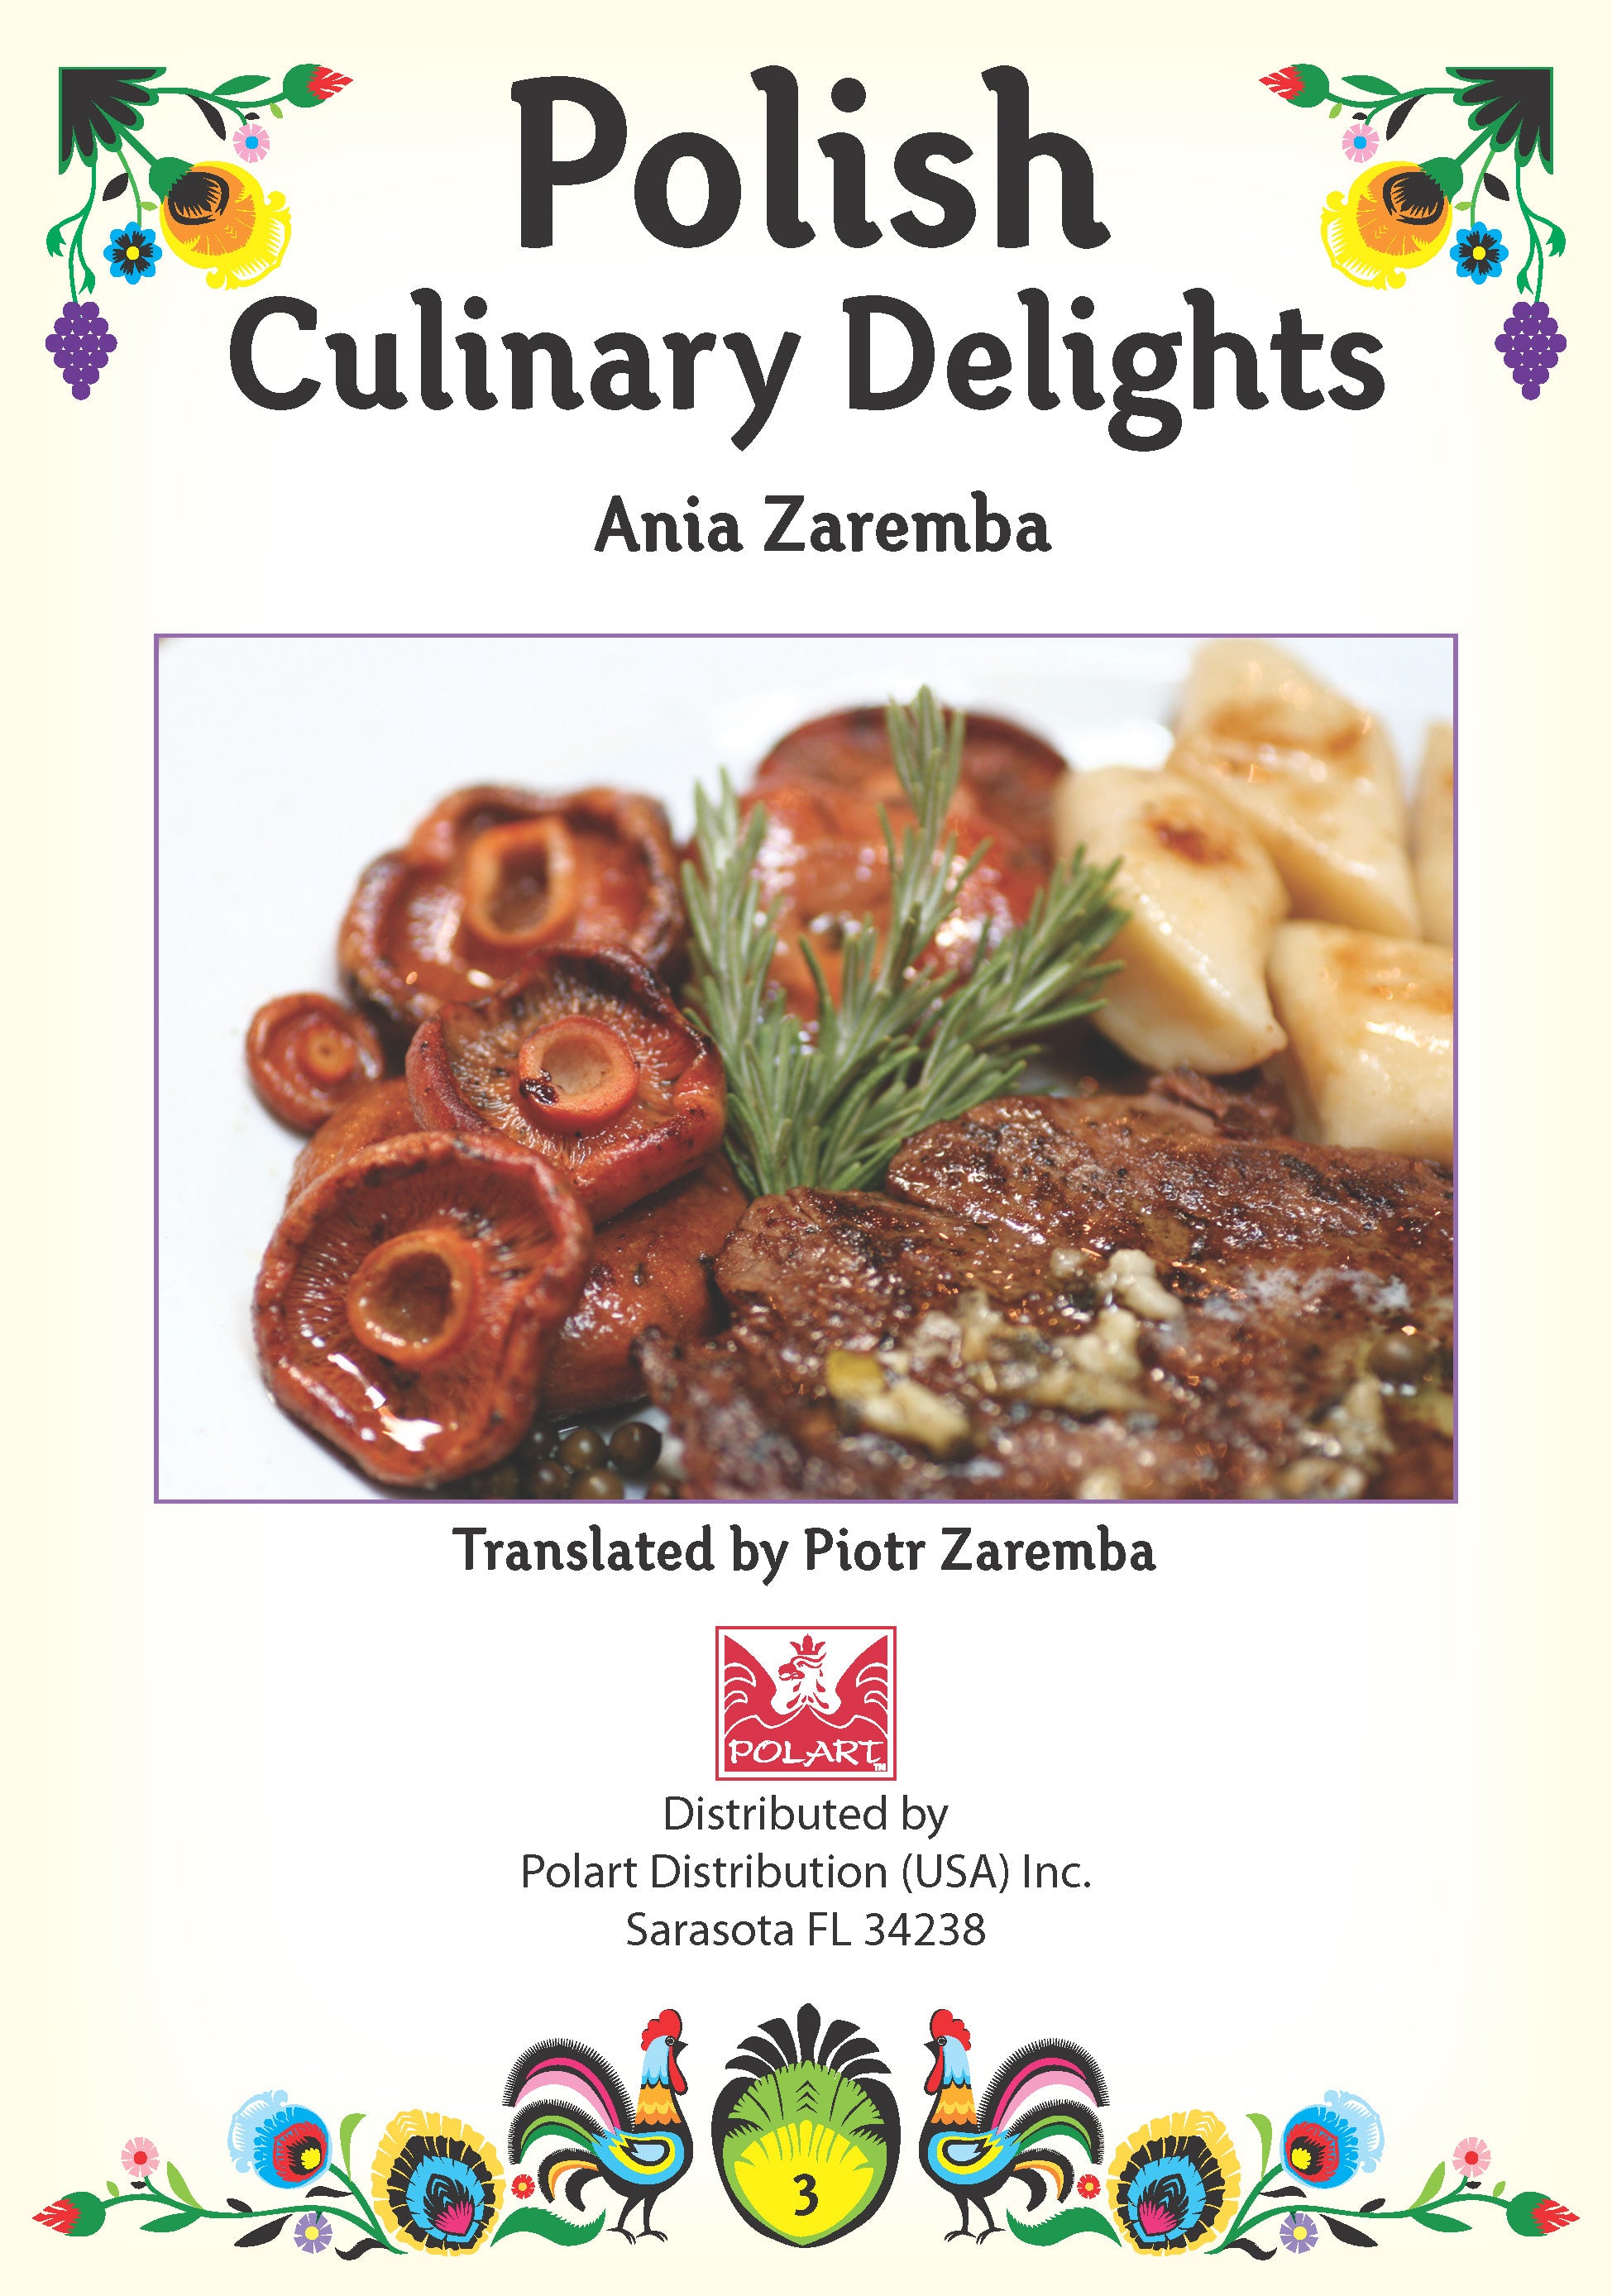 Polish Culinary Delights Cookbook - Ania Zaremba